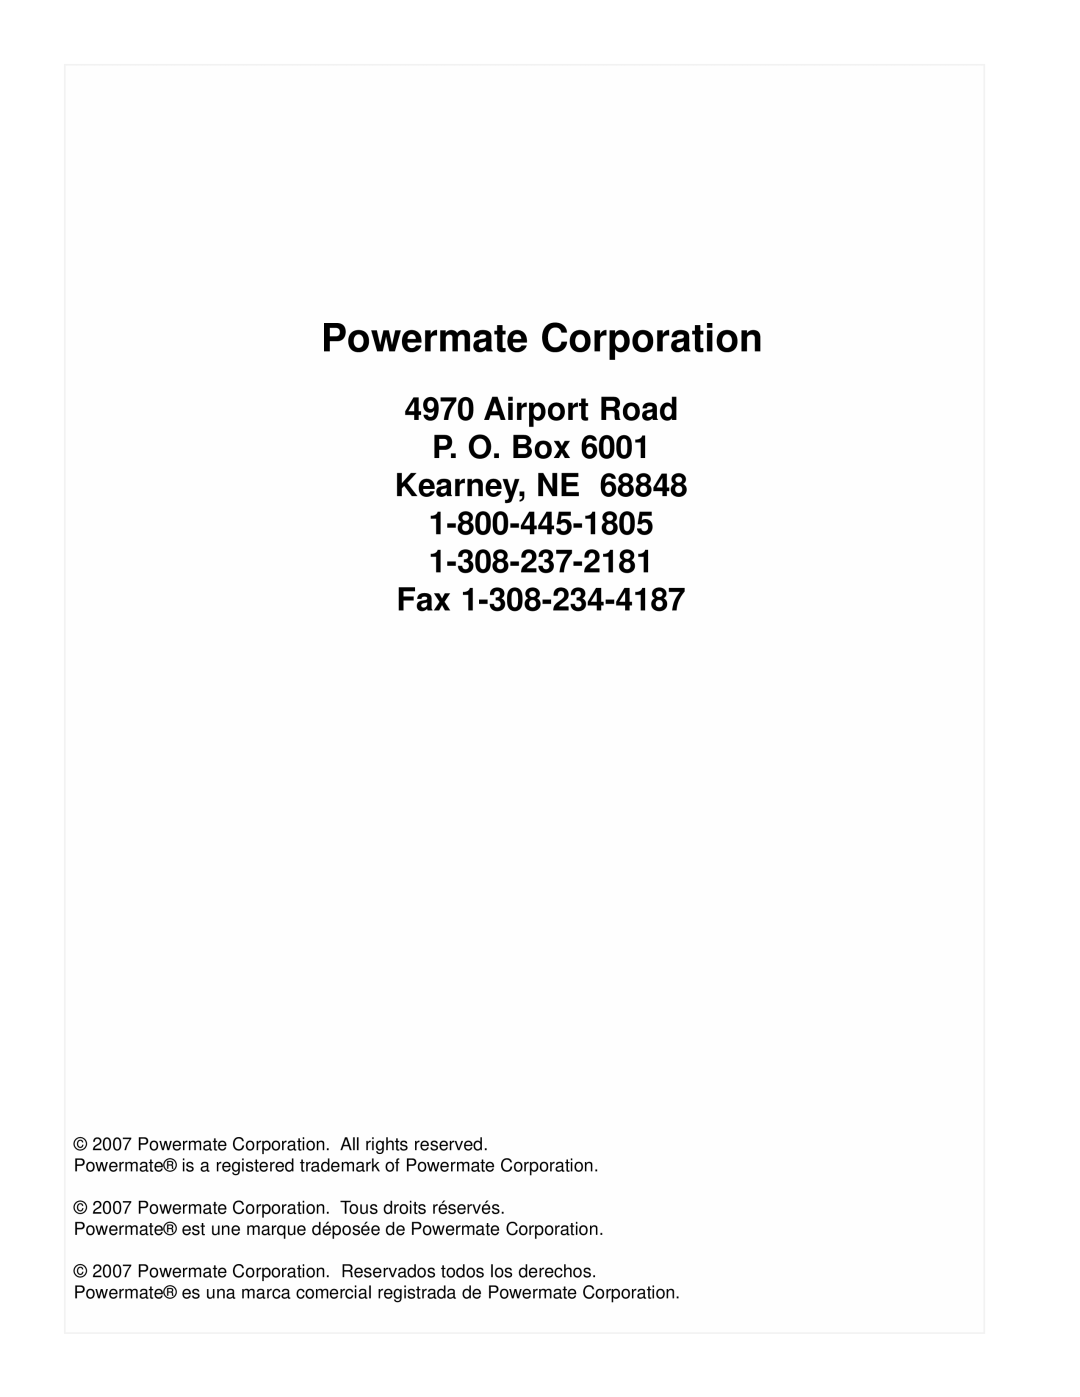 Powermate PC0101100 manual Powermate Corporation, Airport Road P. O. Box Kearney, NE 